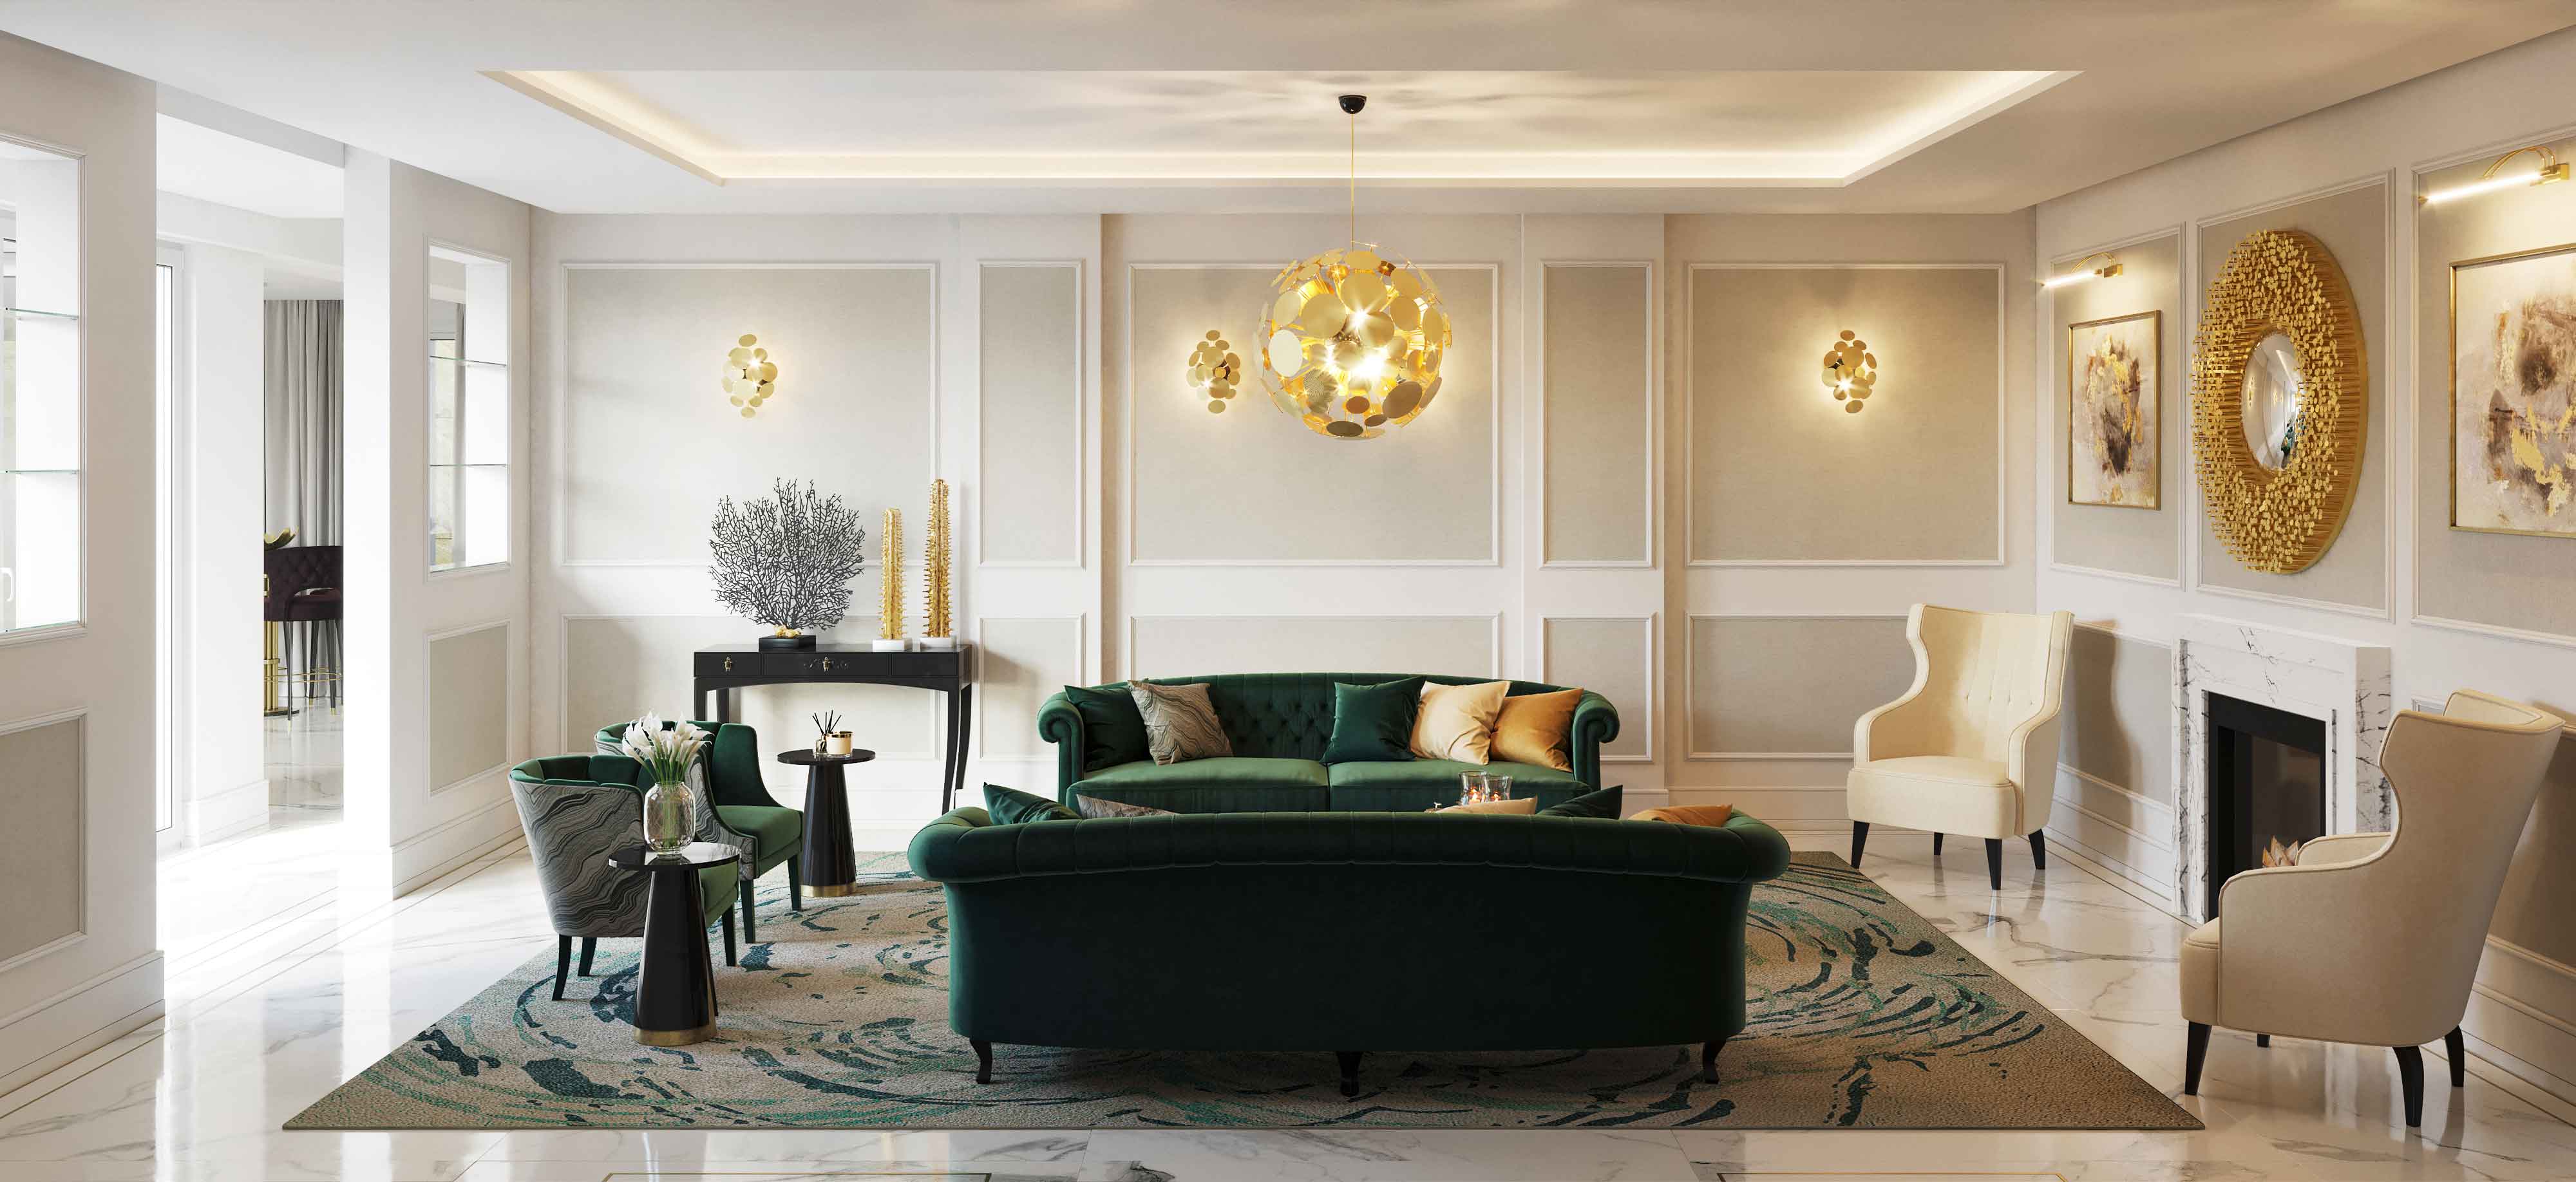 Kassavello - Bespoke Furniture Design & Luxury Brands